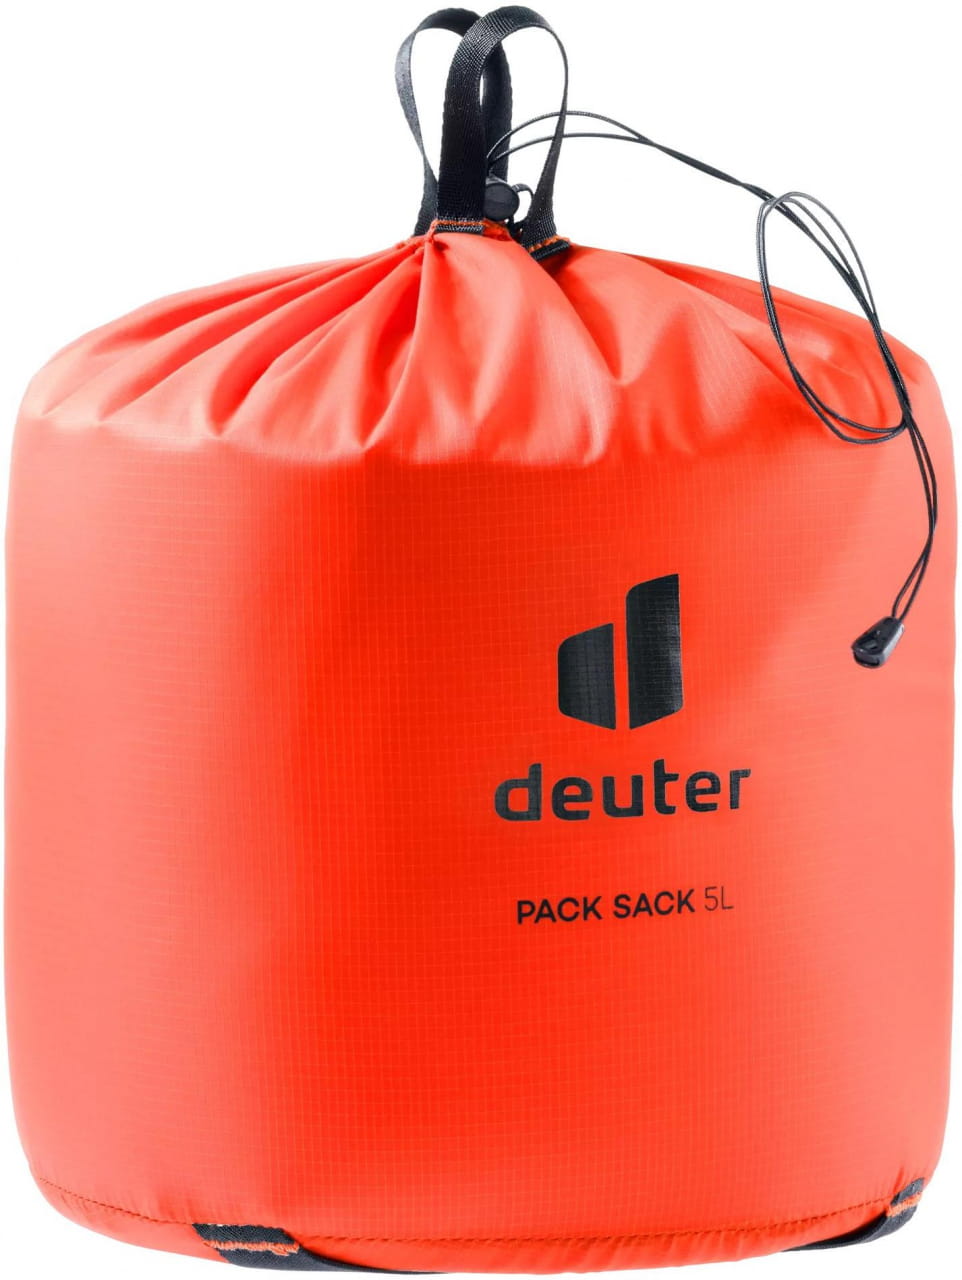 Duffelzak Deuter Pack Sack 5